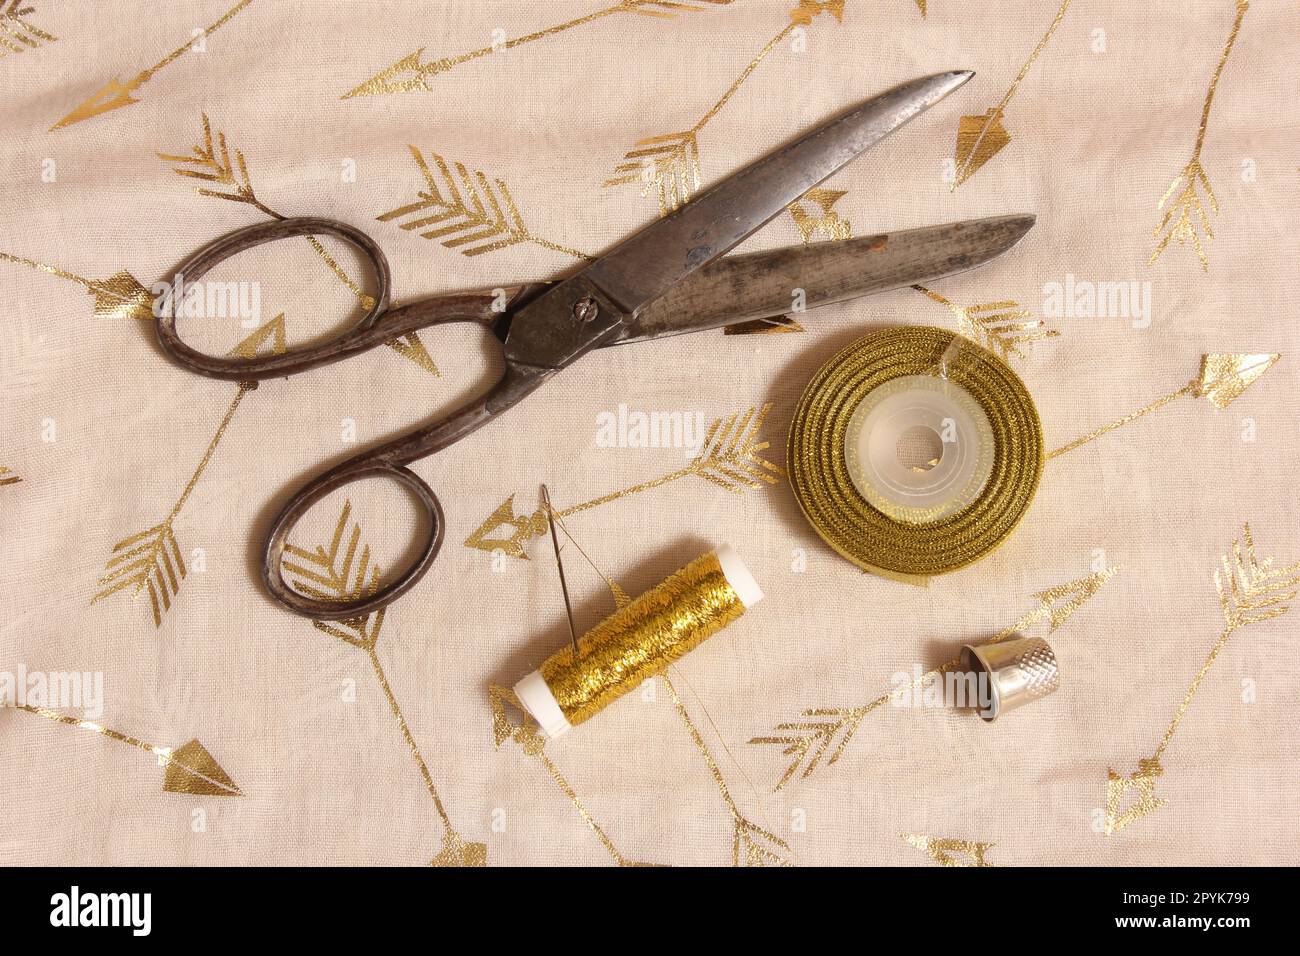 Spool of Gold Thread and Scissors With Thimble on Metallic Chiffon Fabric Stock Photo